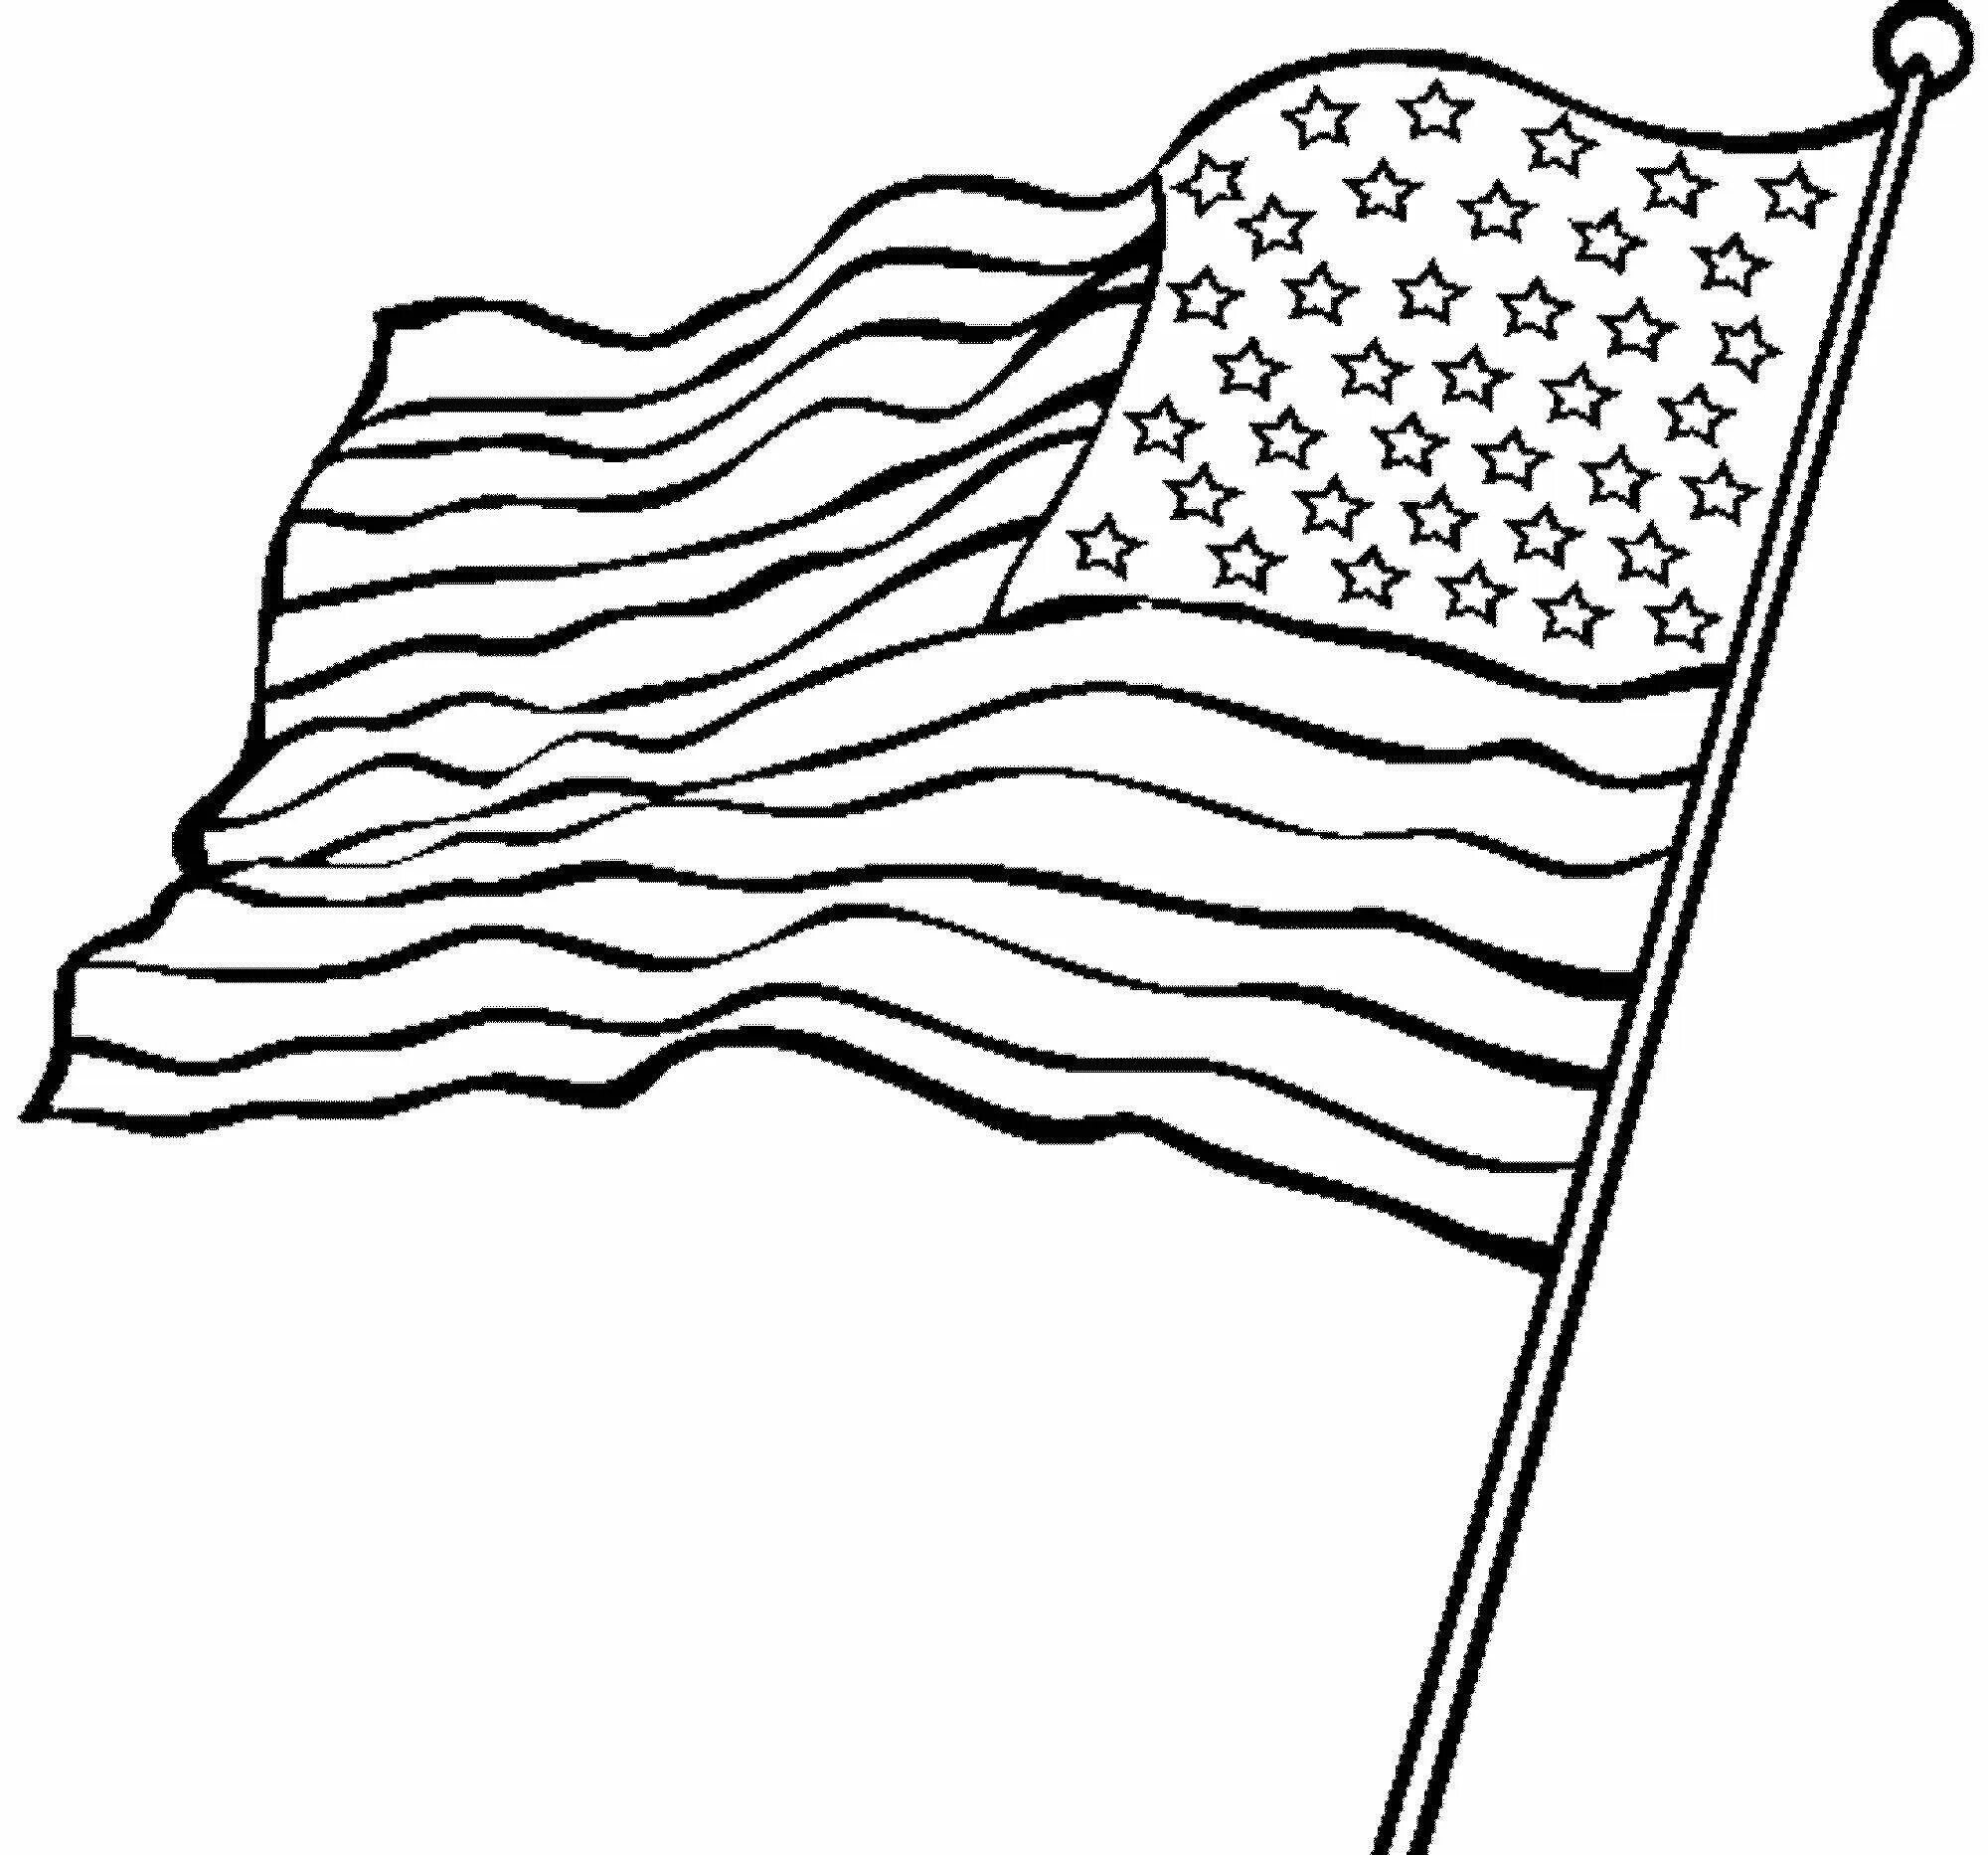 Картинки флаги раскраски. Флаг рисунок. Американский флаг раскраска. Флаг раскраска для детей. Флажок раскраска для детей.